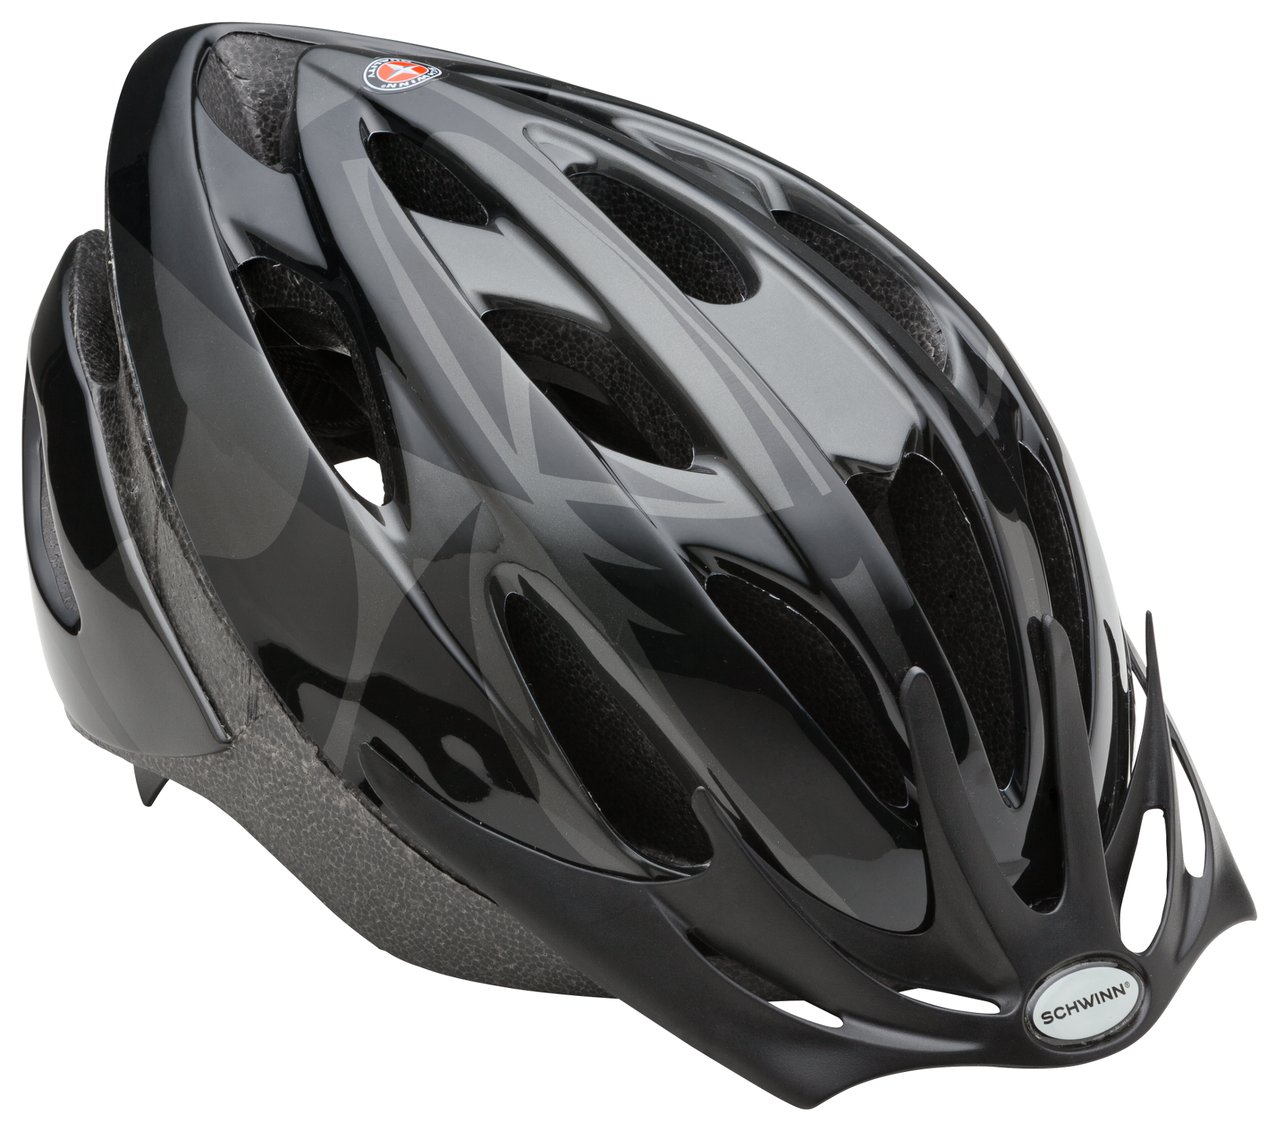 New OEM Thrasher Lighted Adult Helmet Bike Cycle Hat Head Gear - Black